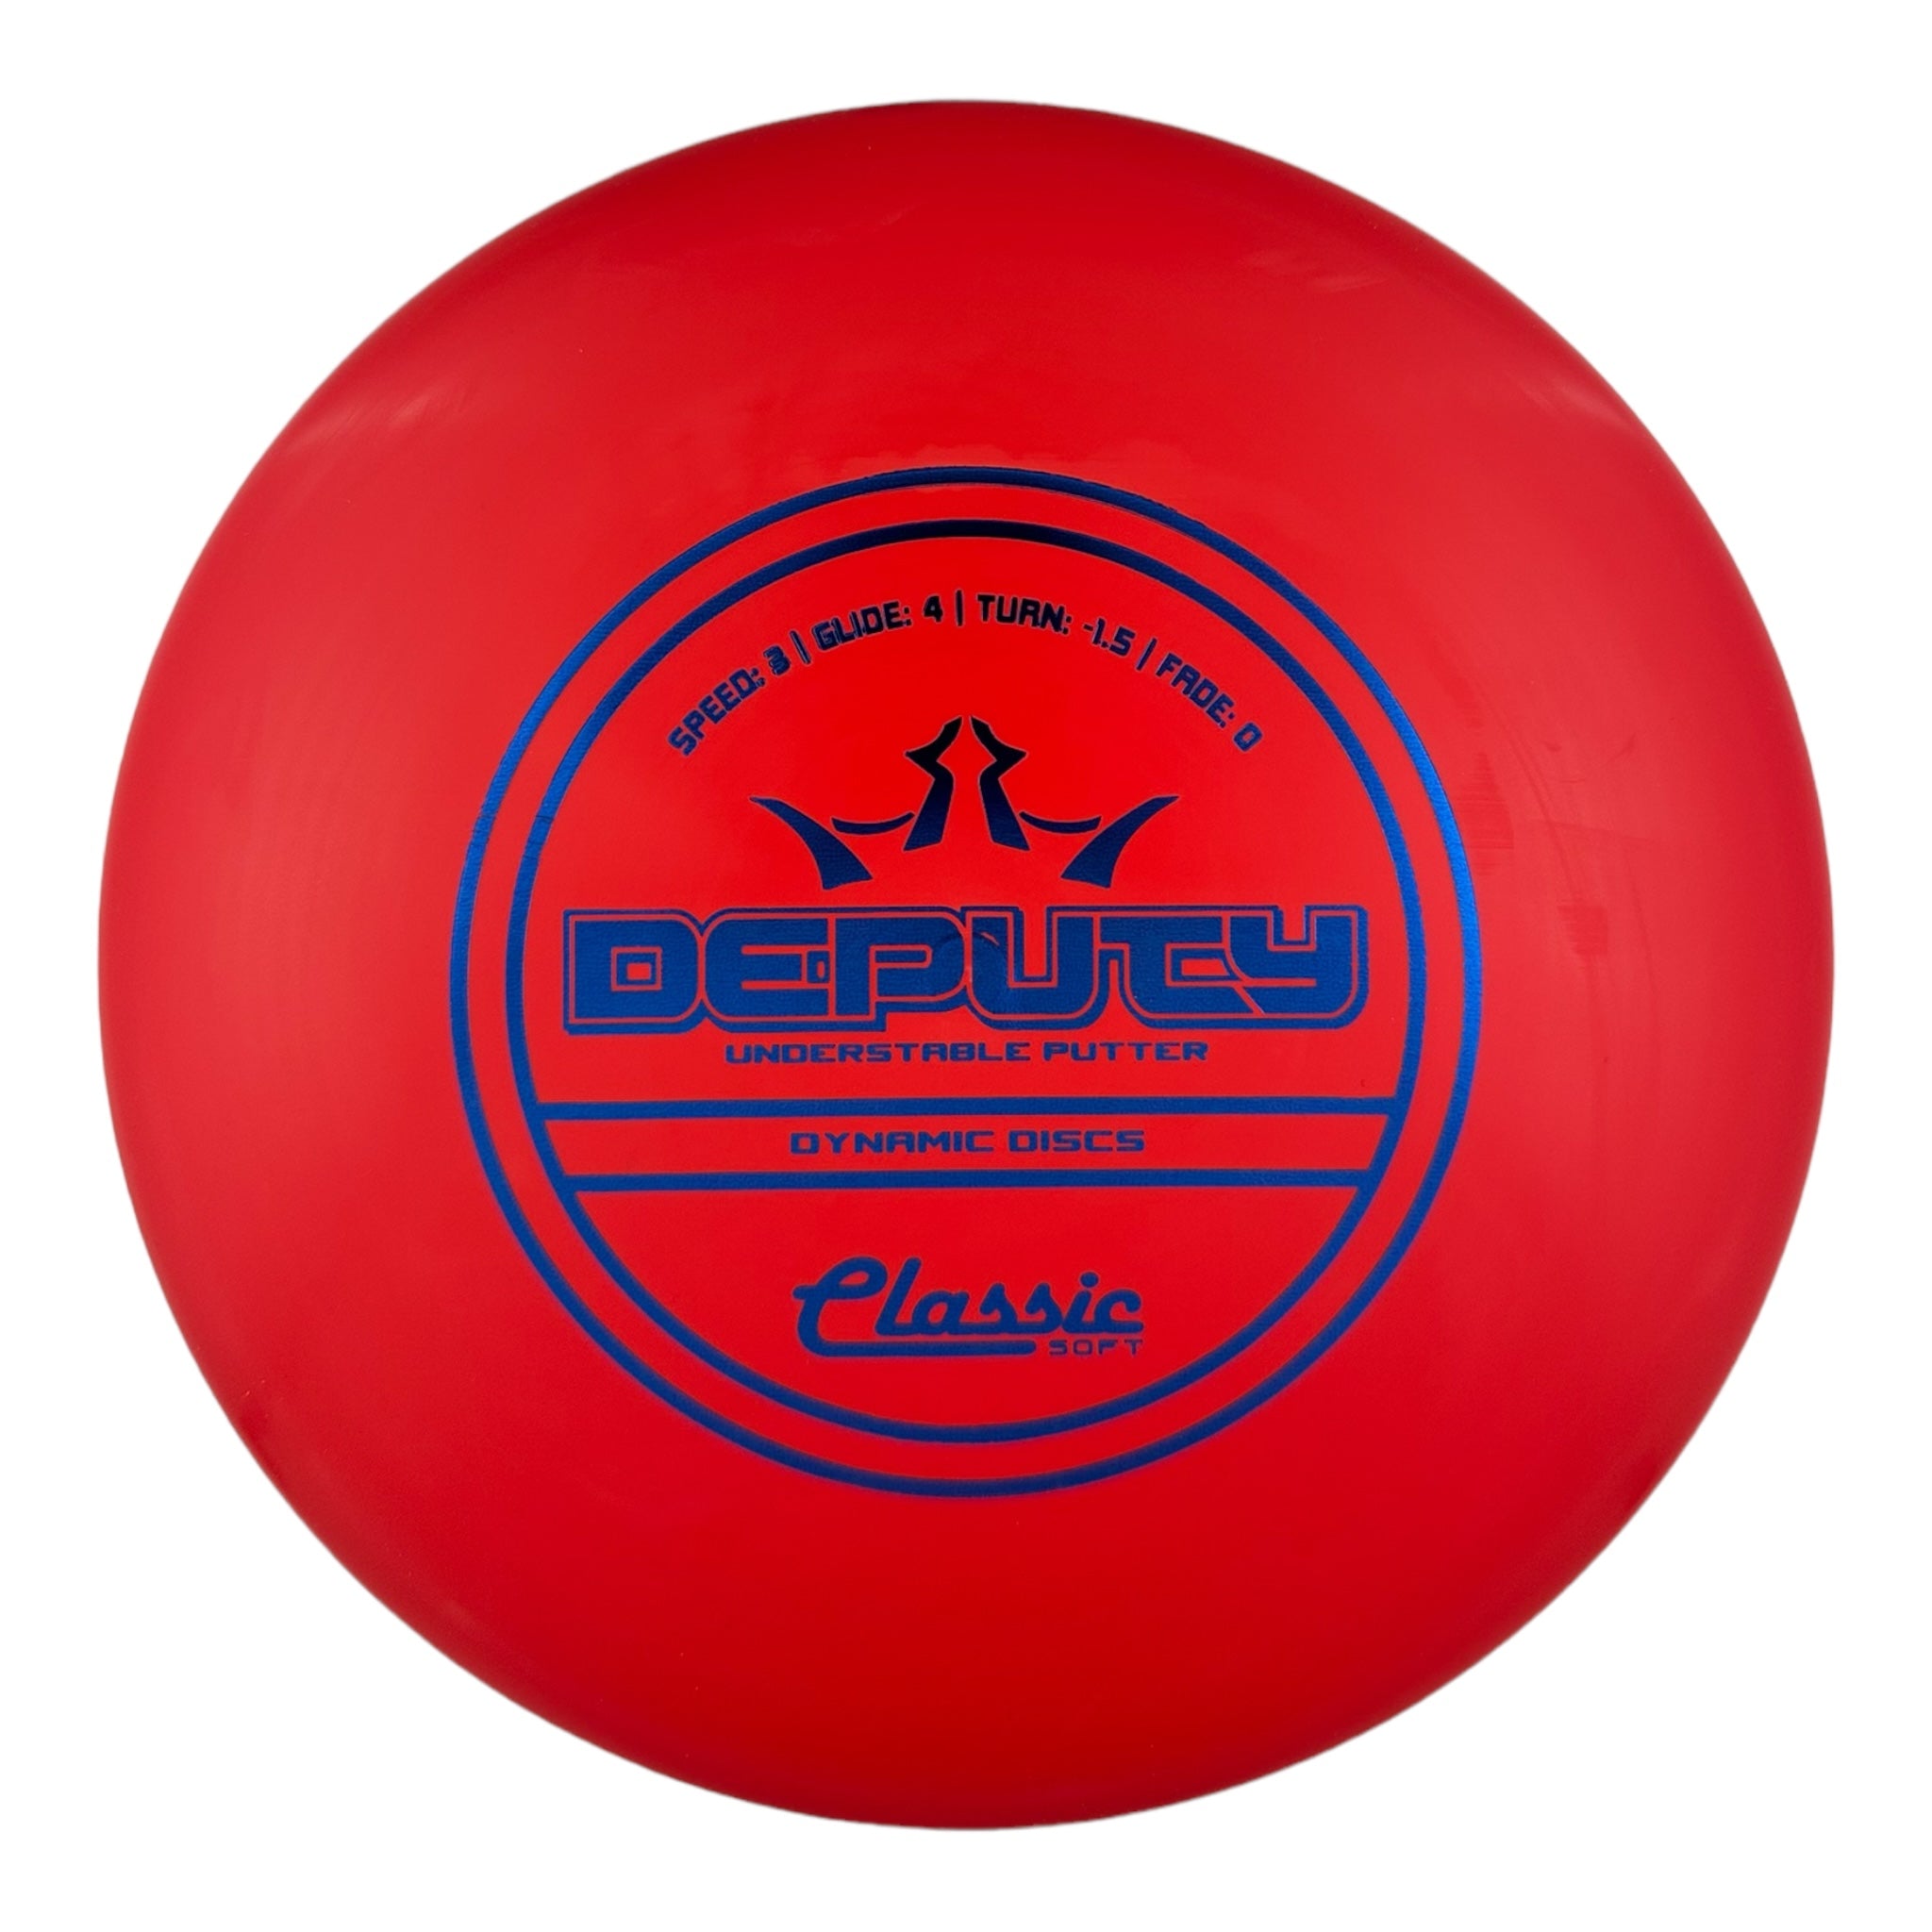 Dynamic Discs Deputy - Classic Soft